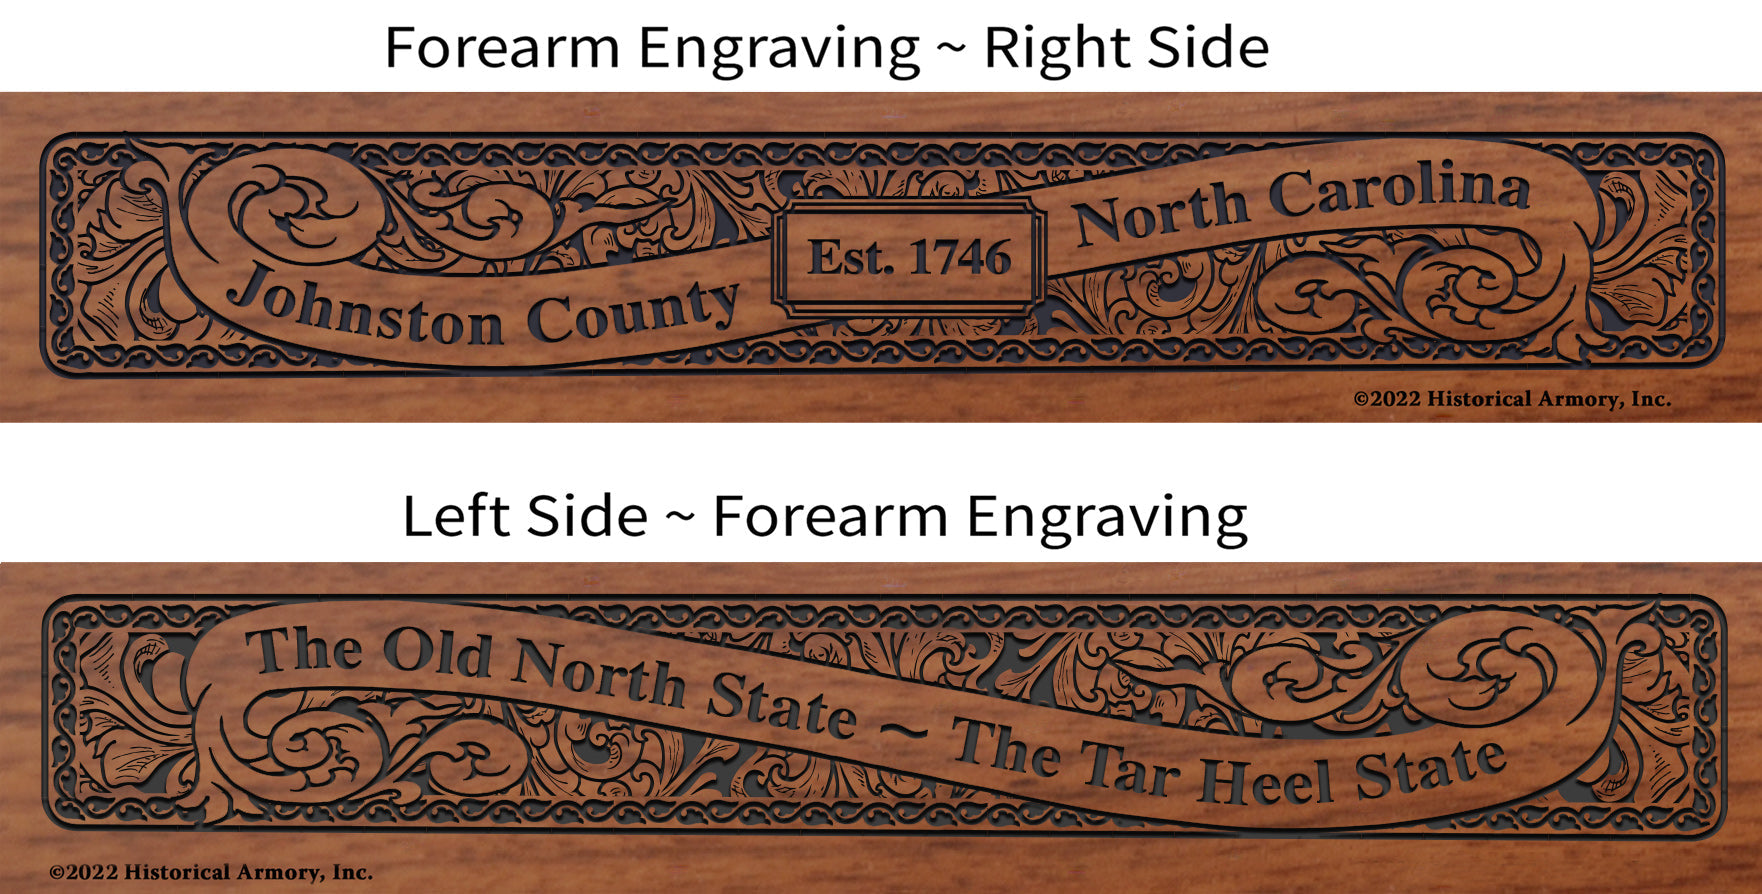 Johnston County North Carolina Engraved Rifle Forearm